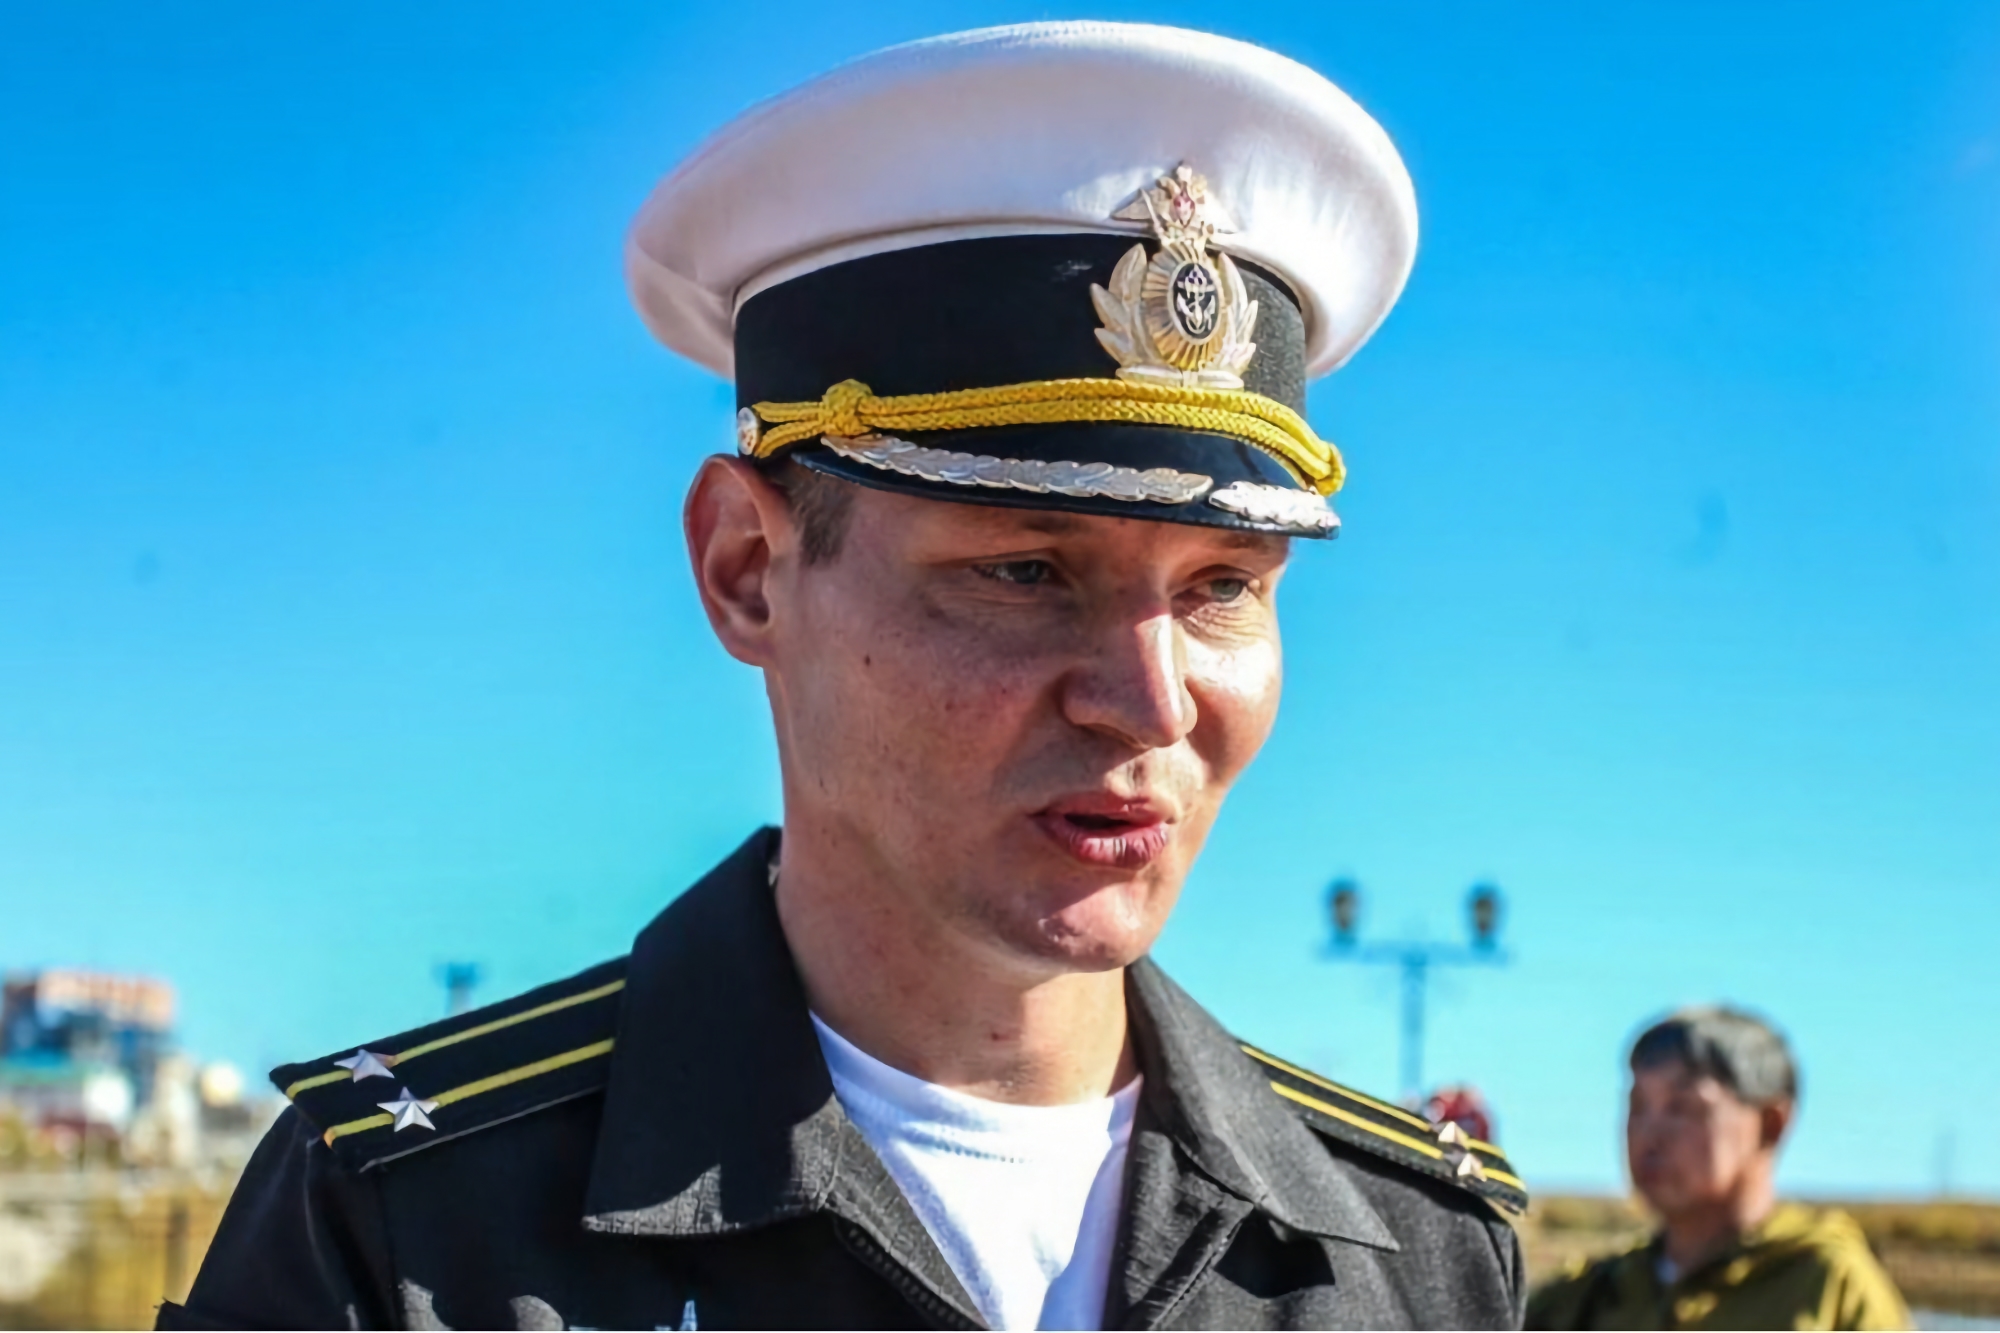 Krasnodar onderzeeër commandant Stanislav Rzhitsky gedood in Rusland, hij werd opgespoord via Strava app